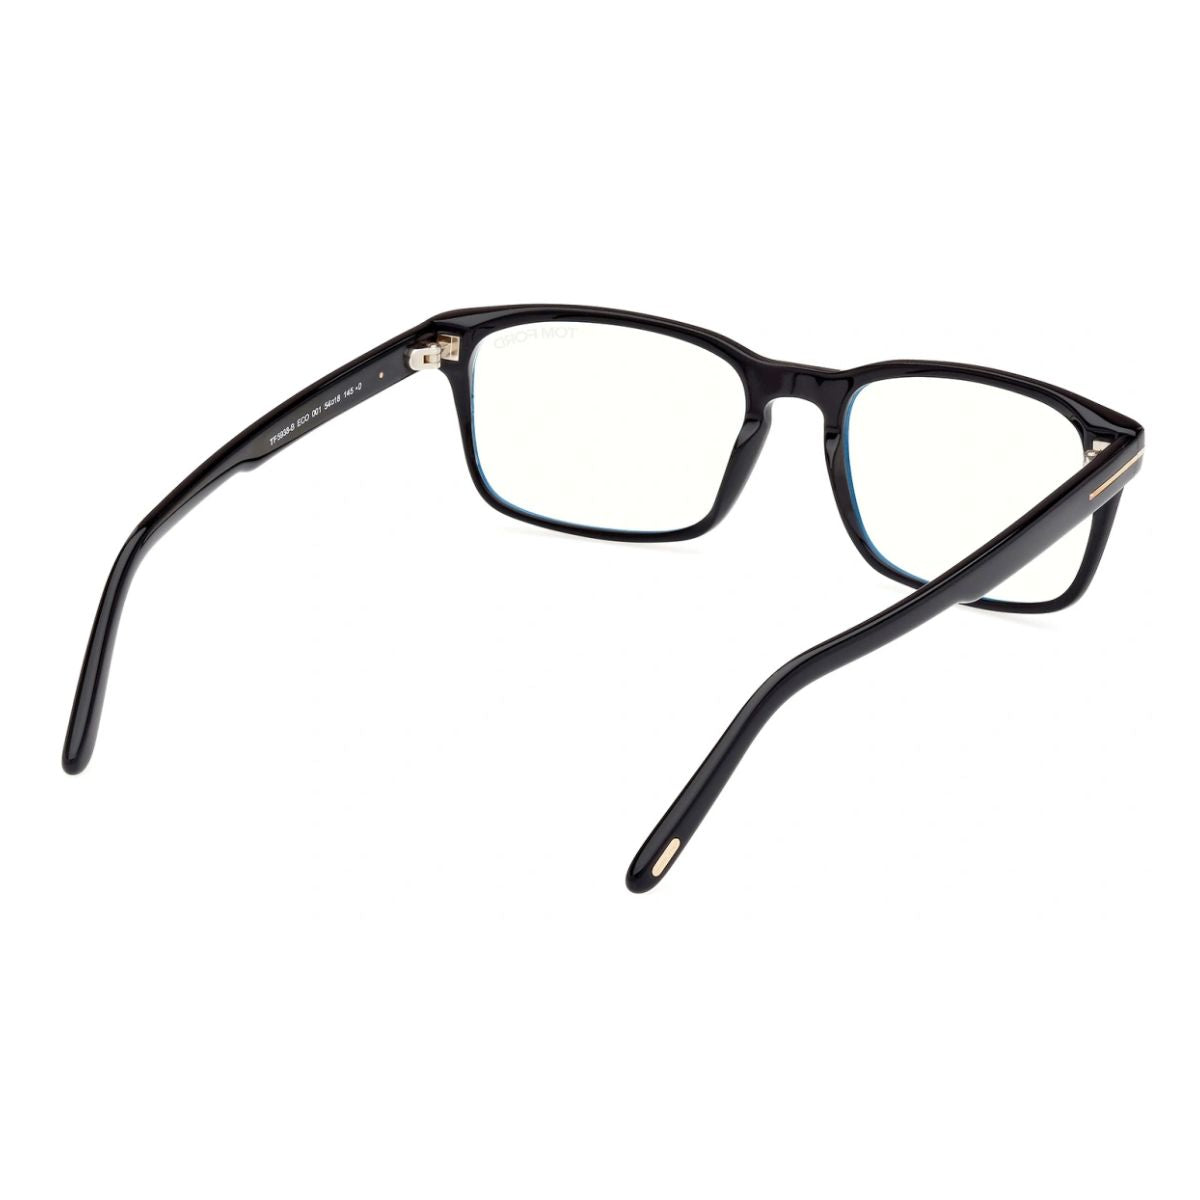 "Stylish men's glasses, Tom Ford TF 5938 001, black, Optorium."